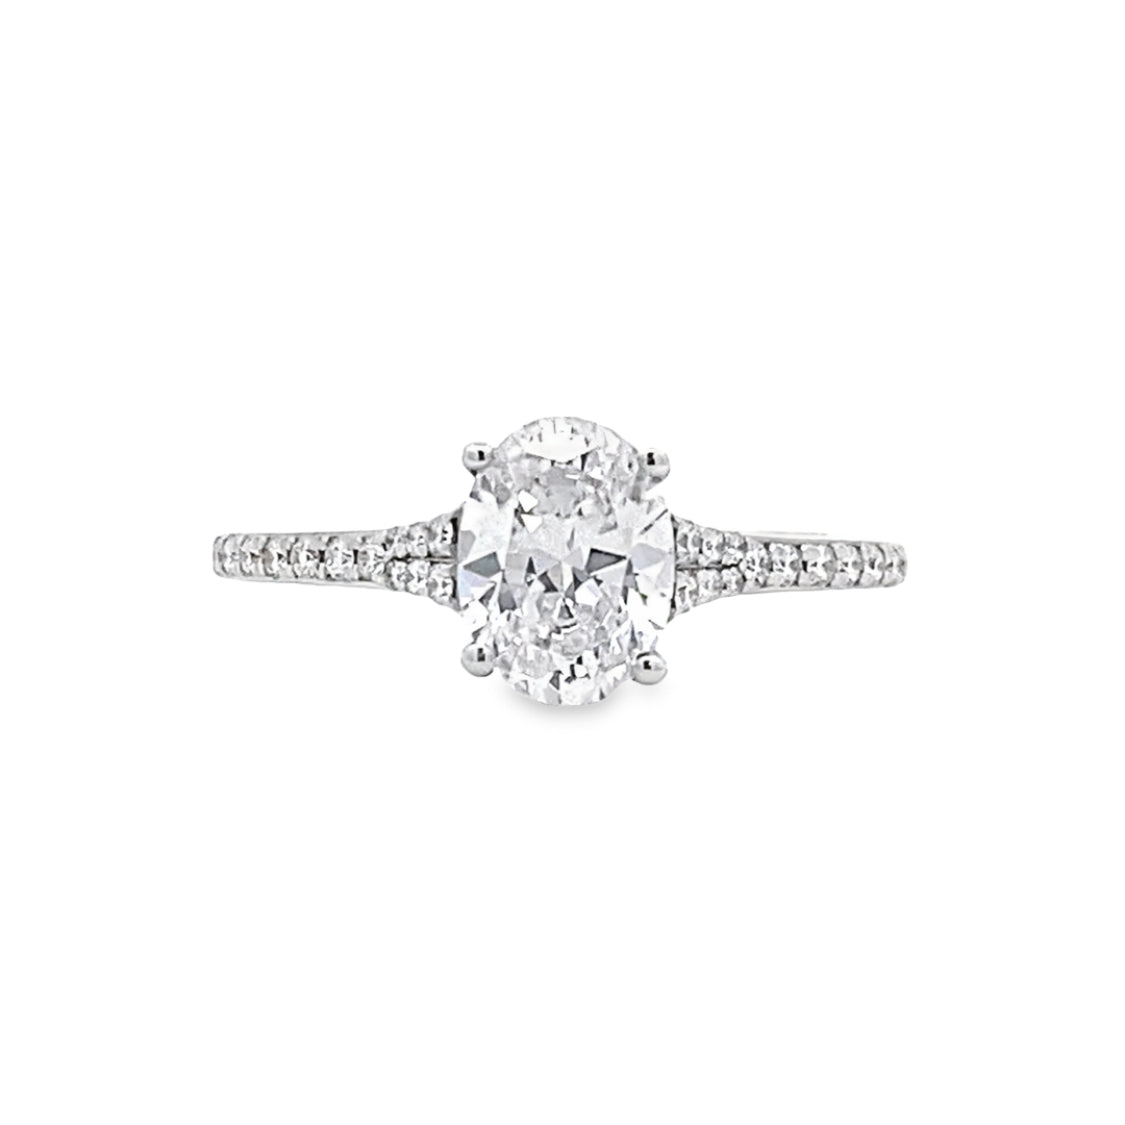 Simon G Jewelry 18 Karat White Gold Side Stones Oval Shape Engagement Ring LR2507-OV